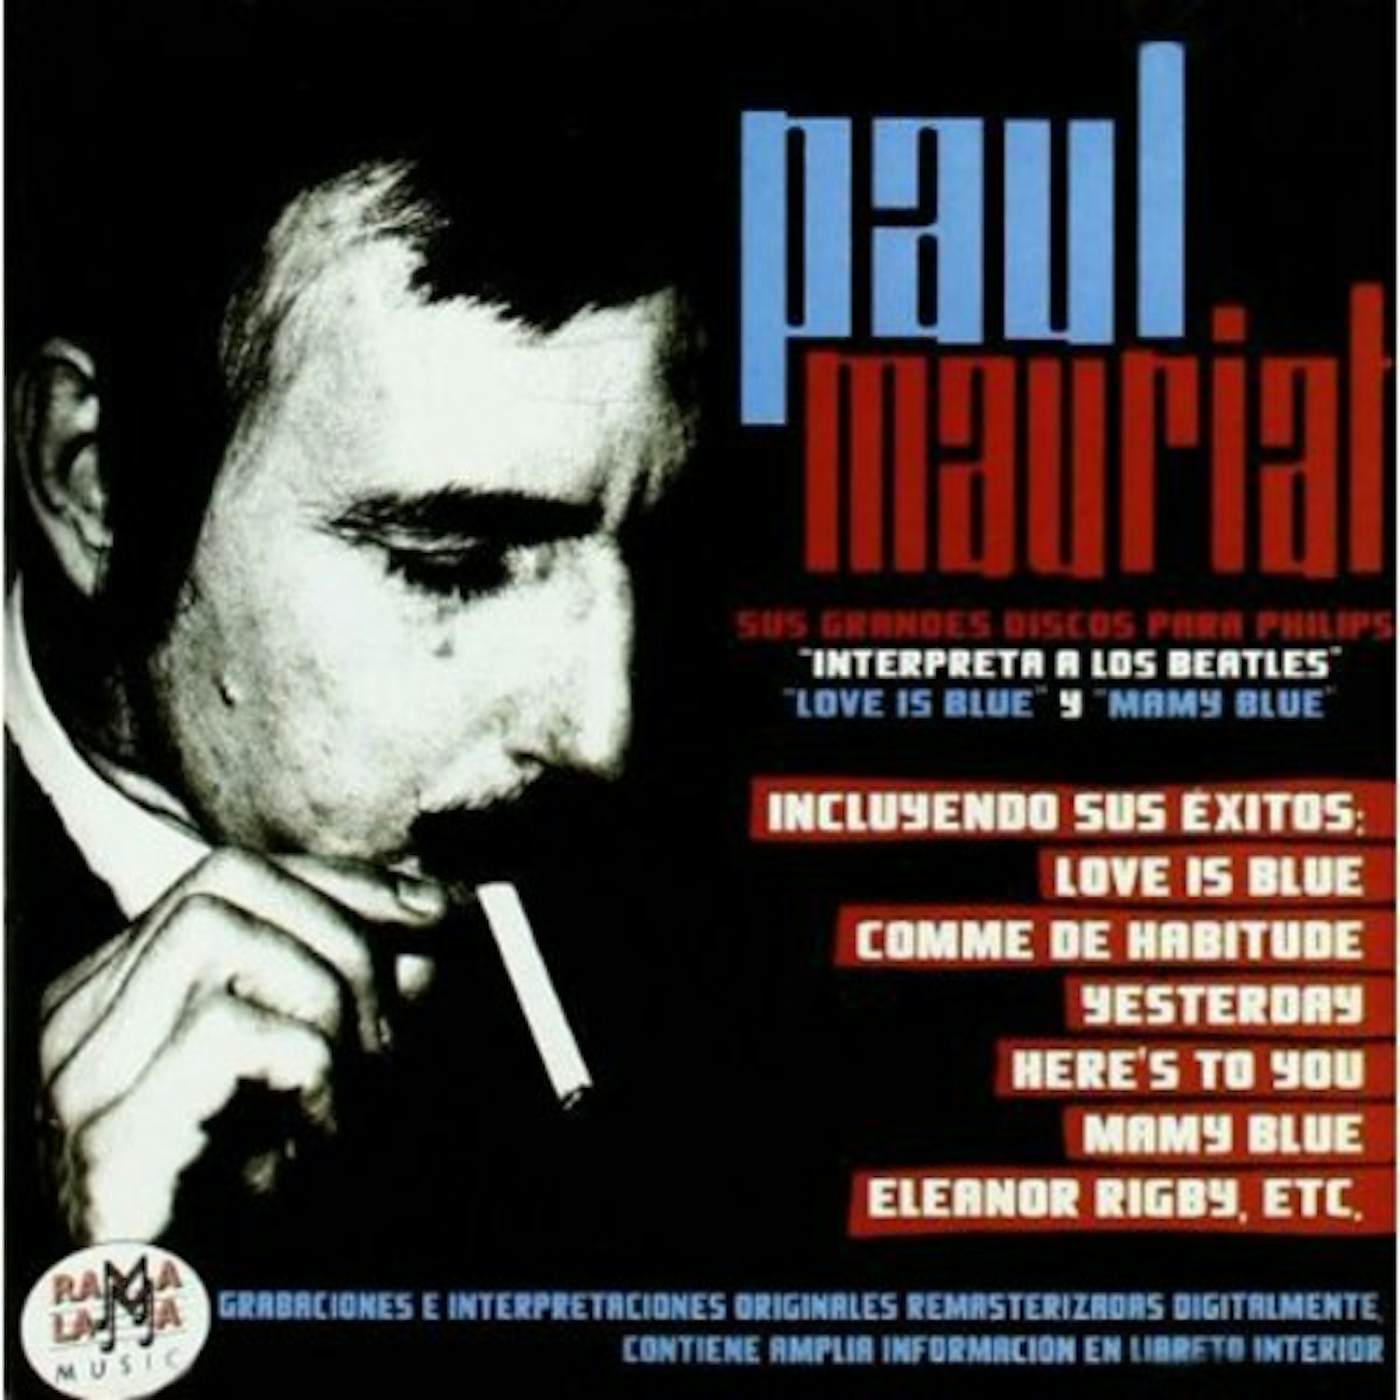 Paul Mauriat SUS GRANDES DISCOS EN PHILIPS (1967-1971) CD